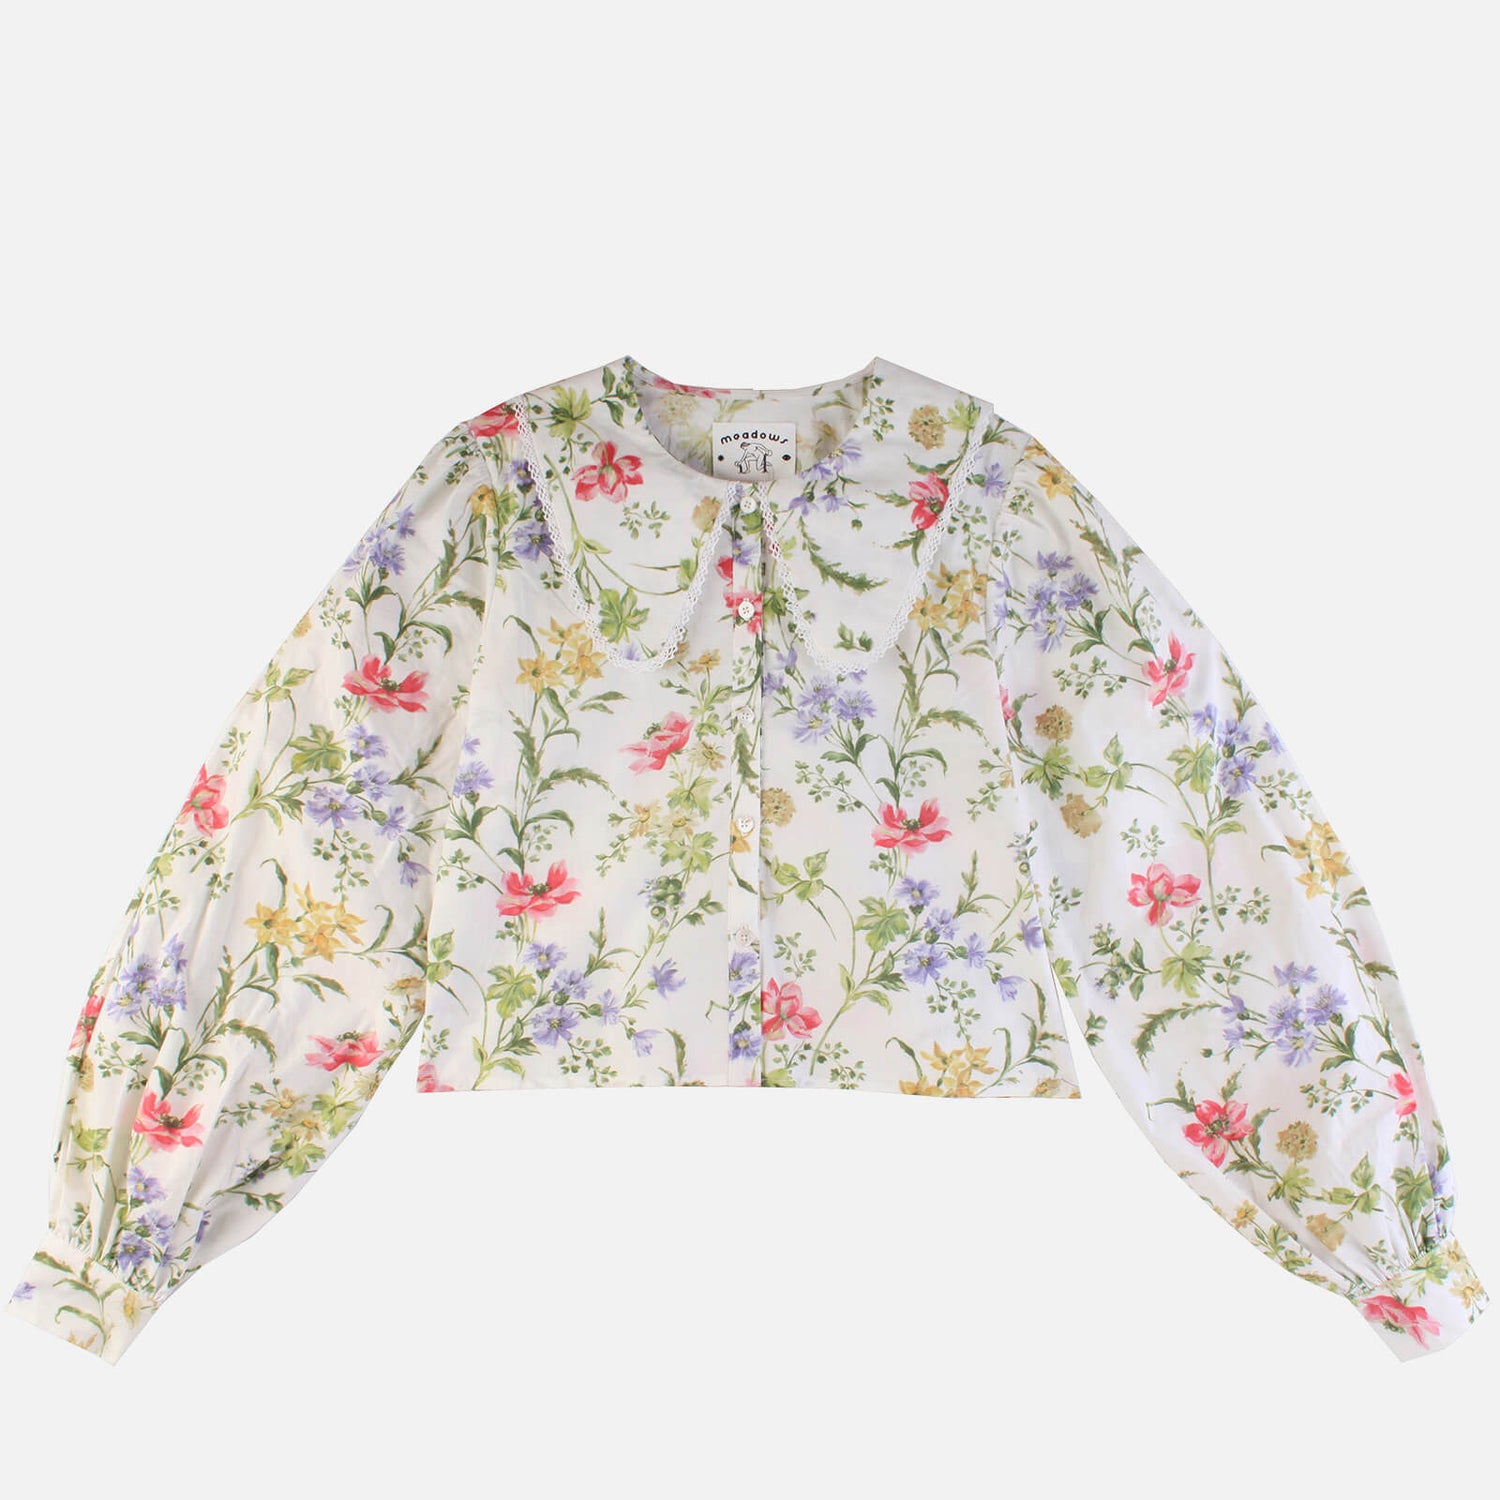 Meadows Women's Foxglove Shirt - Springtime Floral